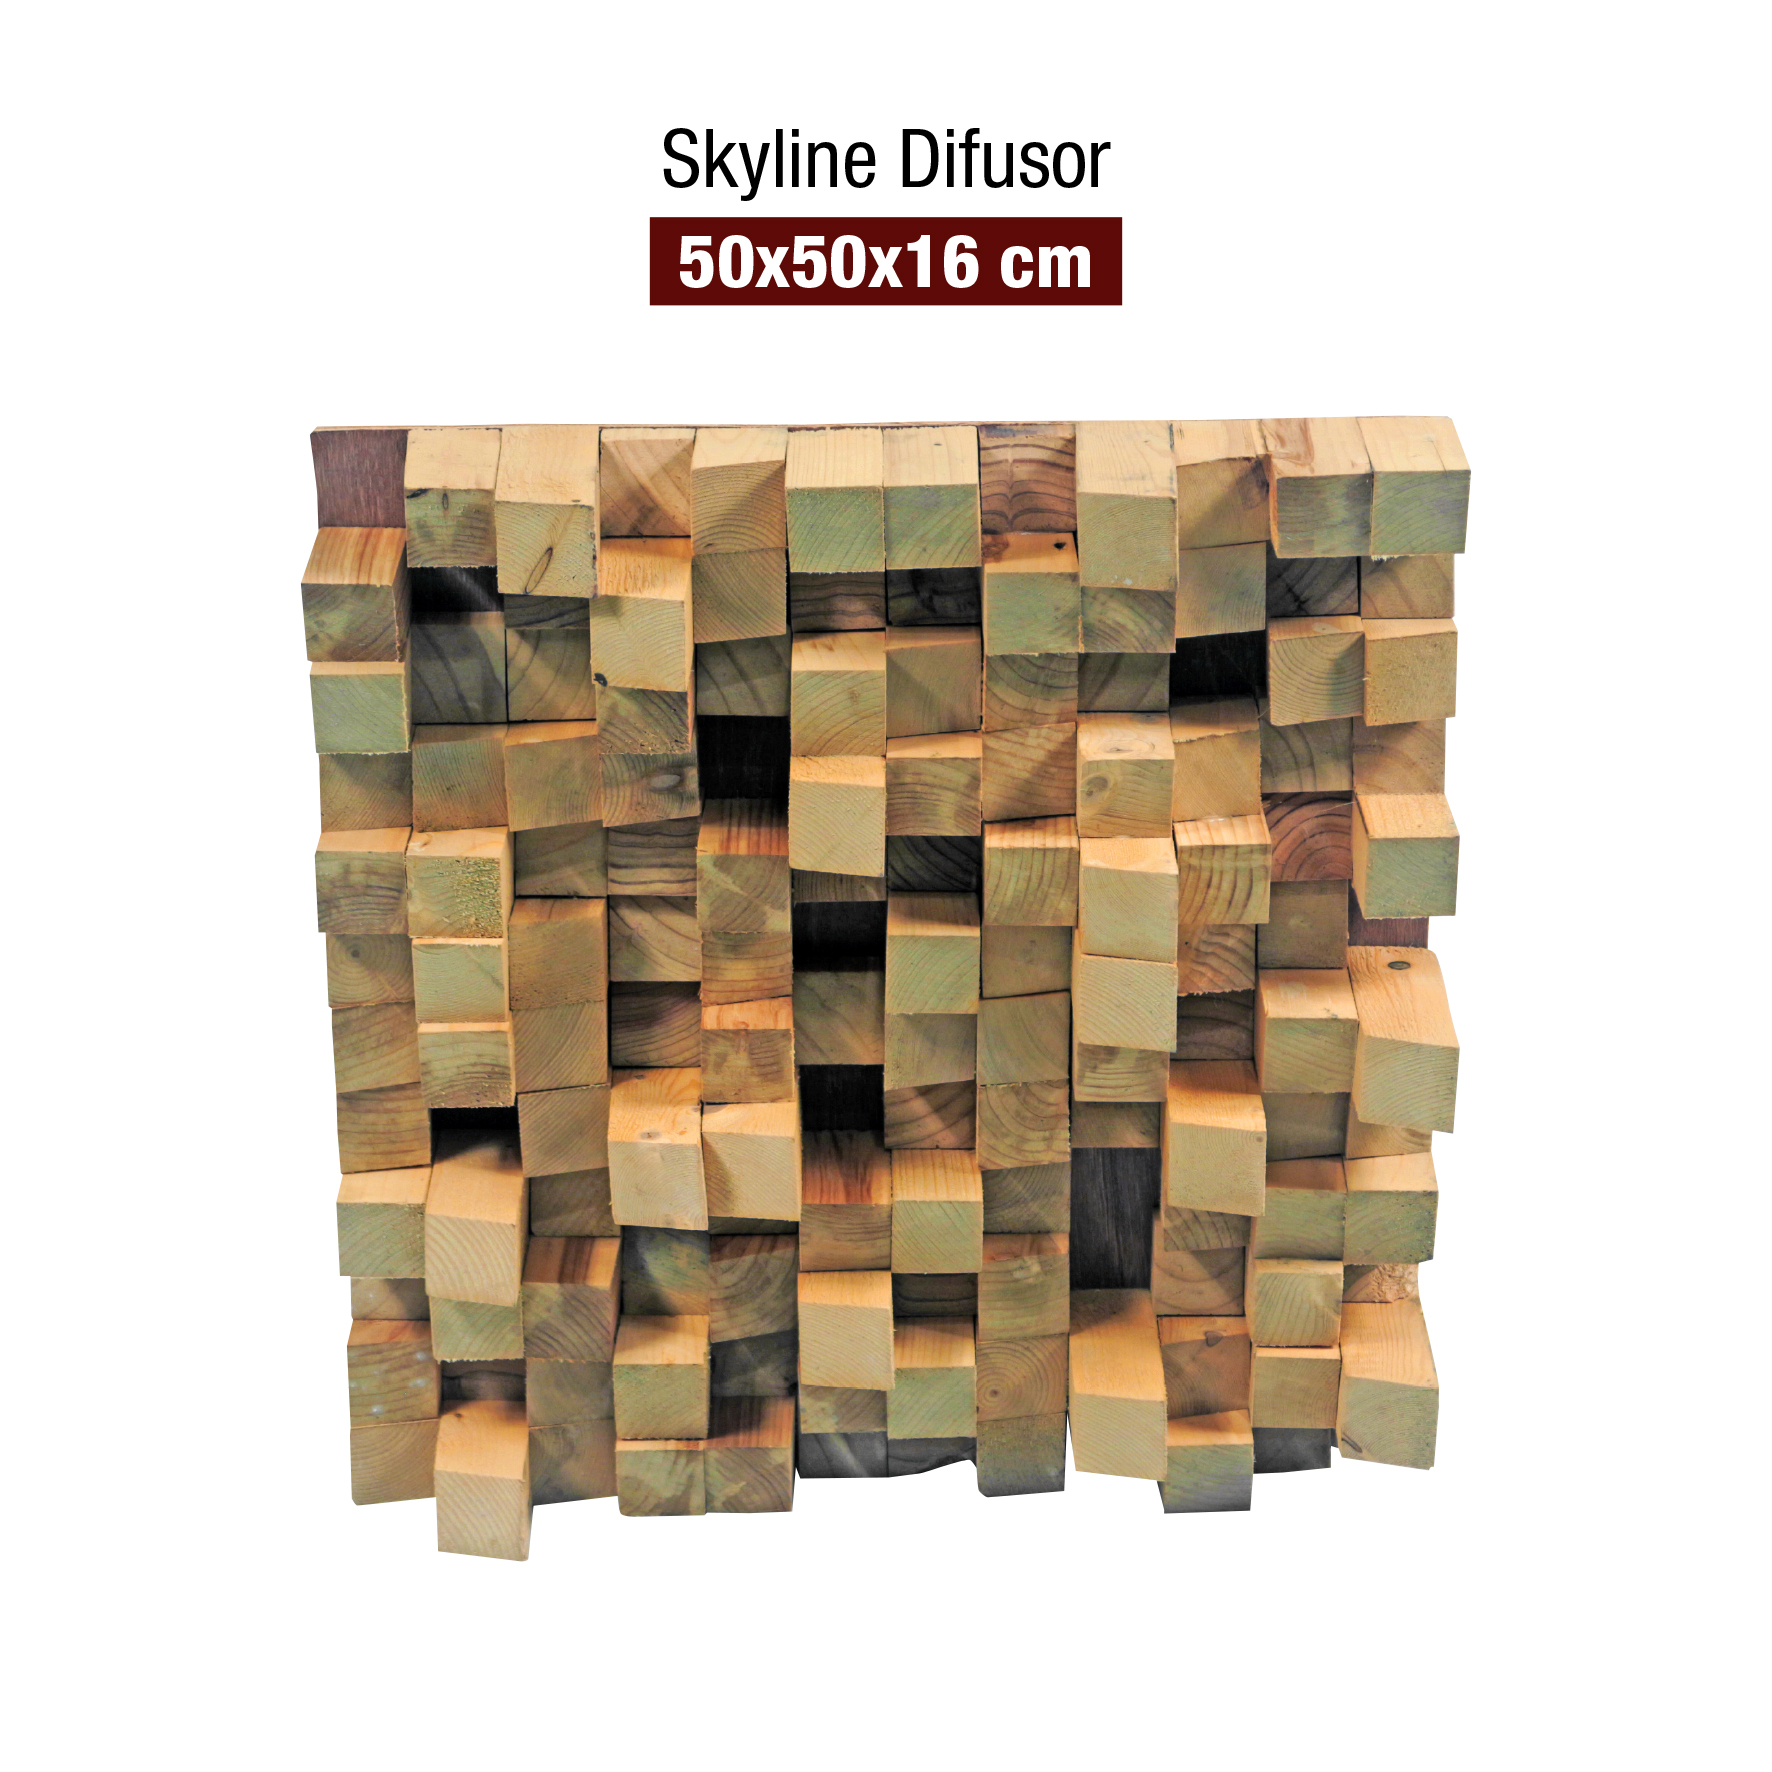 Skyline Diffuser - Partner Mystudio